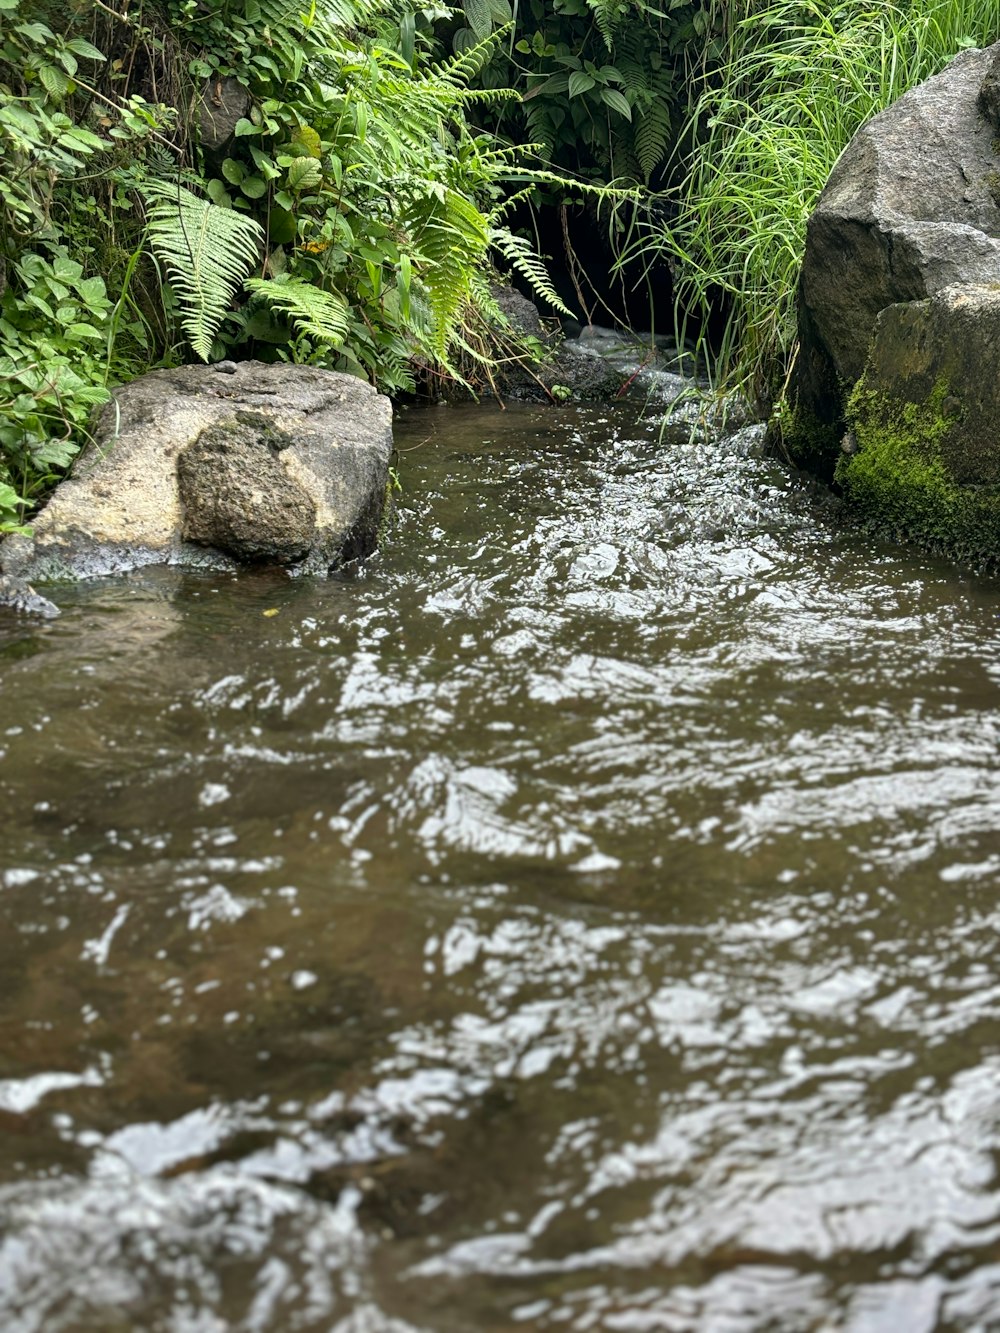 a stream running through a lush green forest